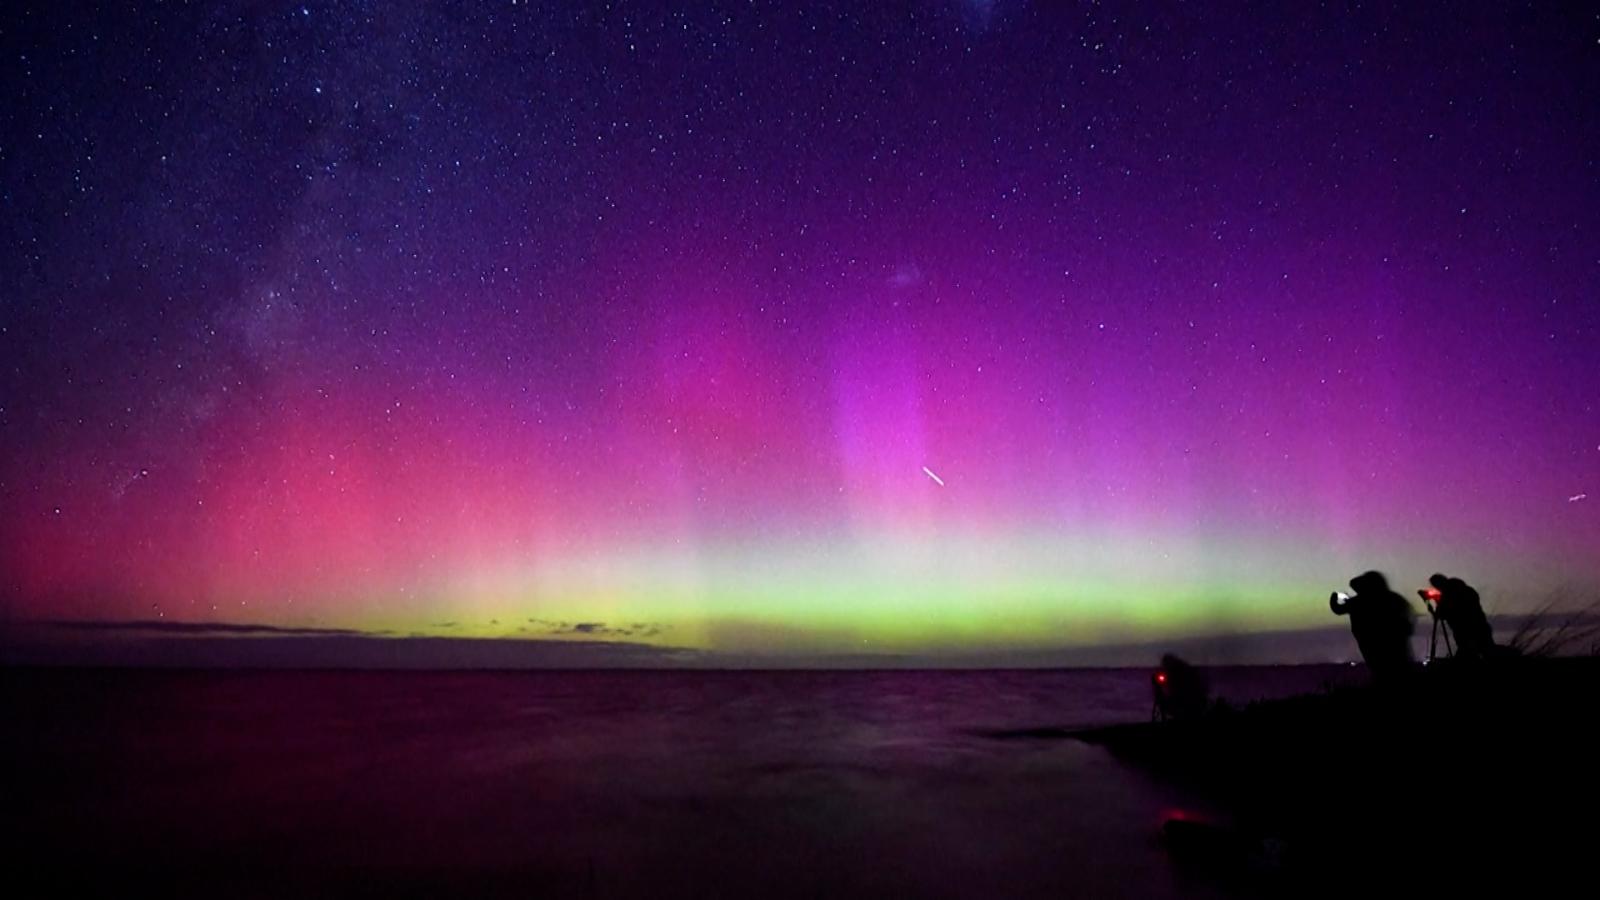 The stunning aurora australis lights up the New Zealand sky